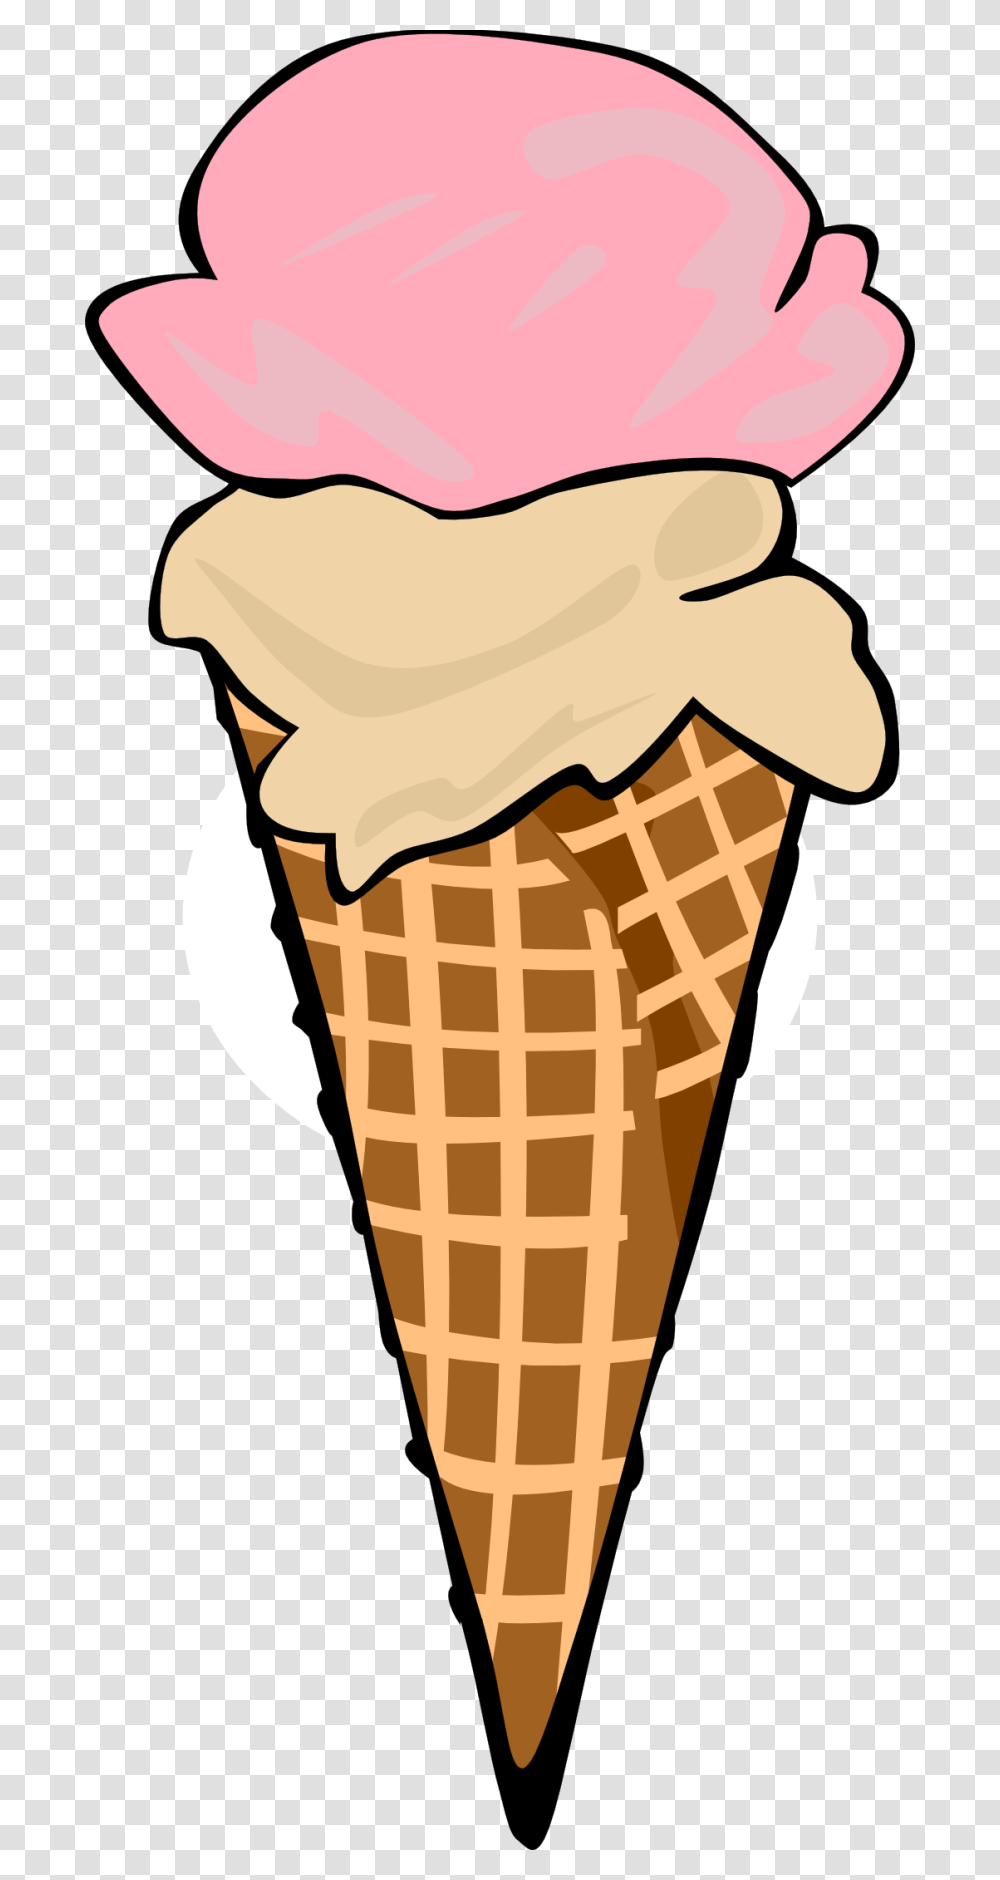 Cool Ice Cream Cone Clipart Images, Dessert, Food, Creme, Baseball Cap Transparent Png